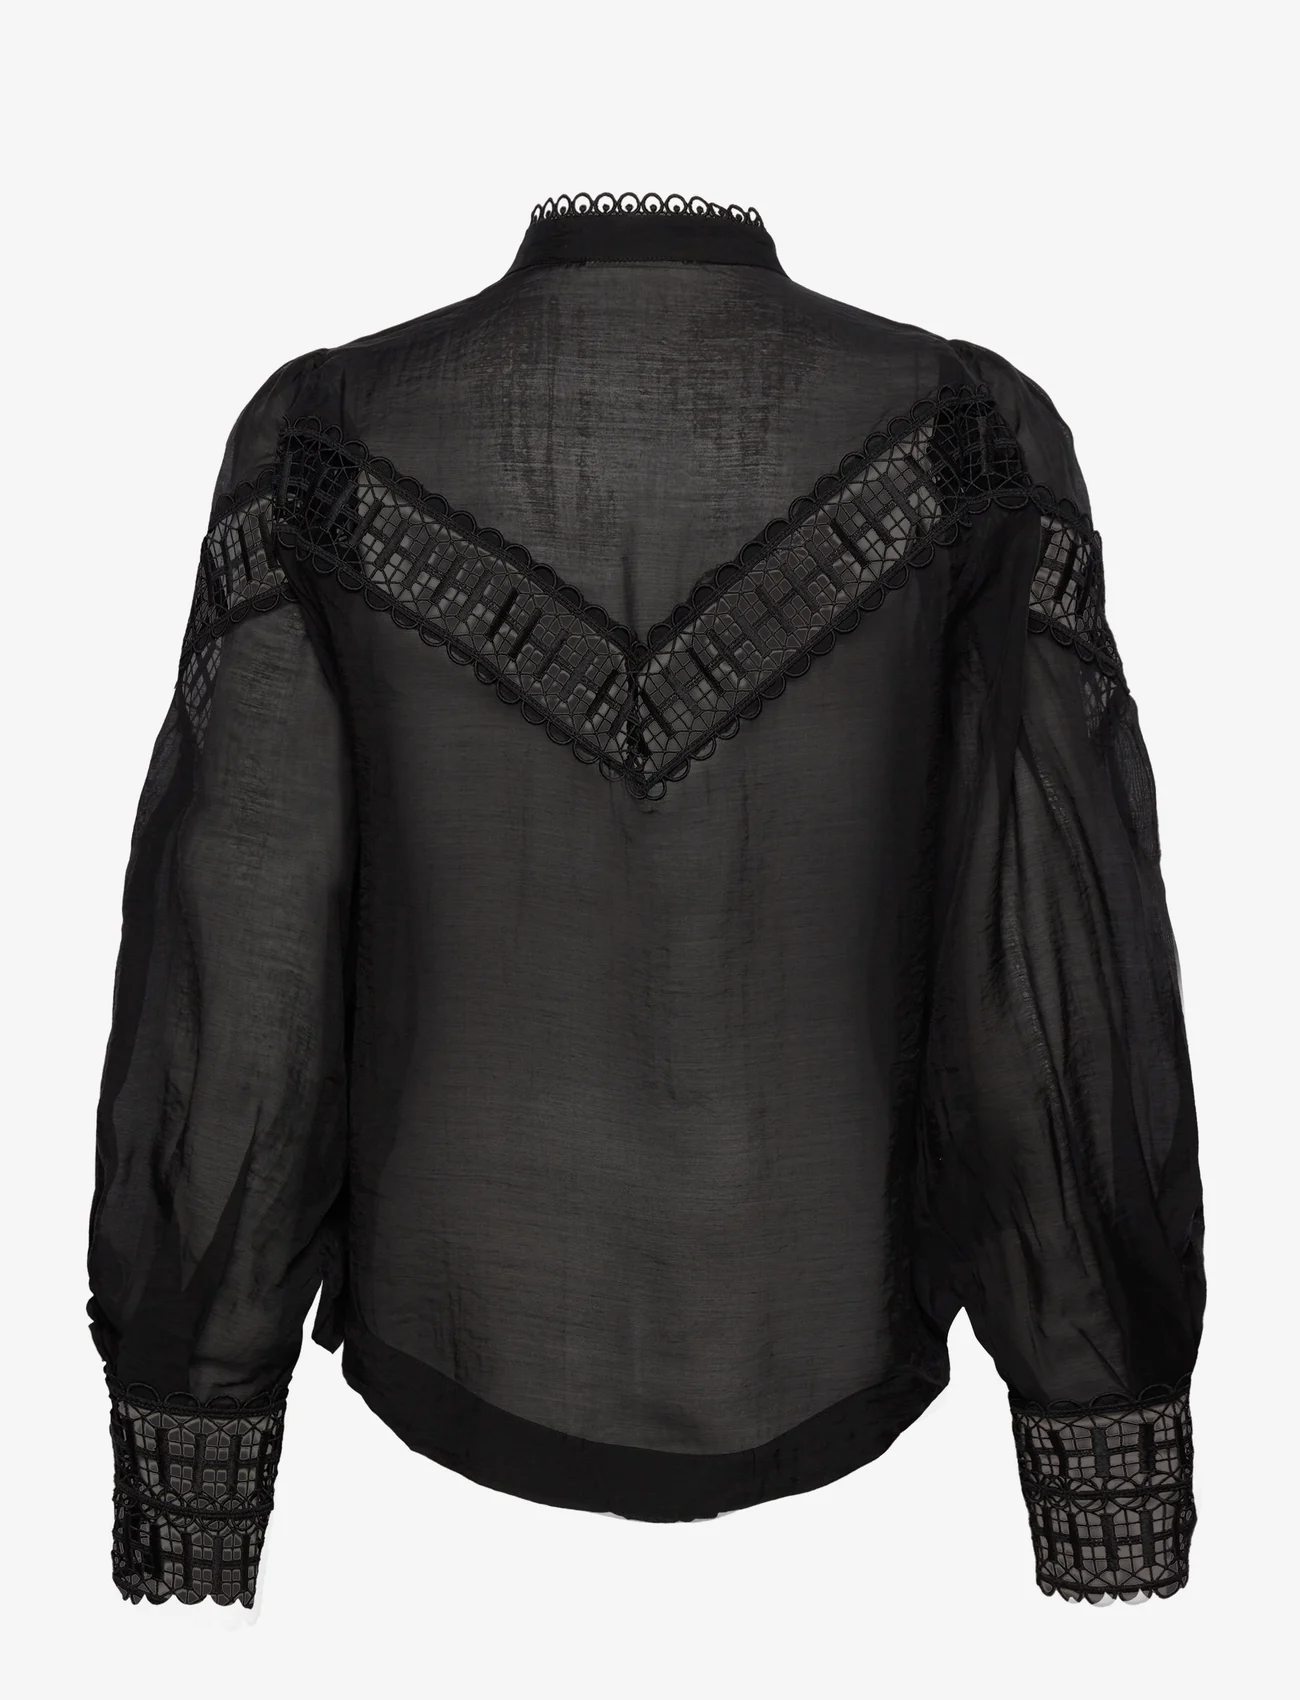 Copenhagen Muse - CMULTRA-SHIRT - long-sleeved blouses - black - 1